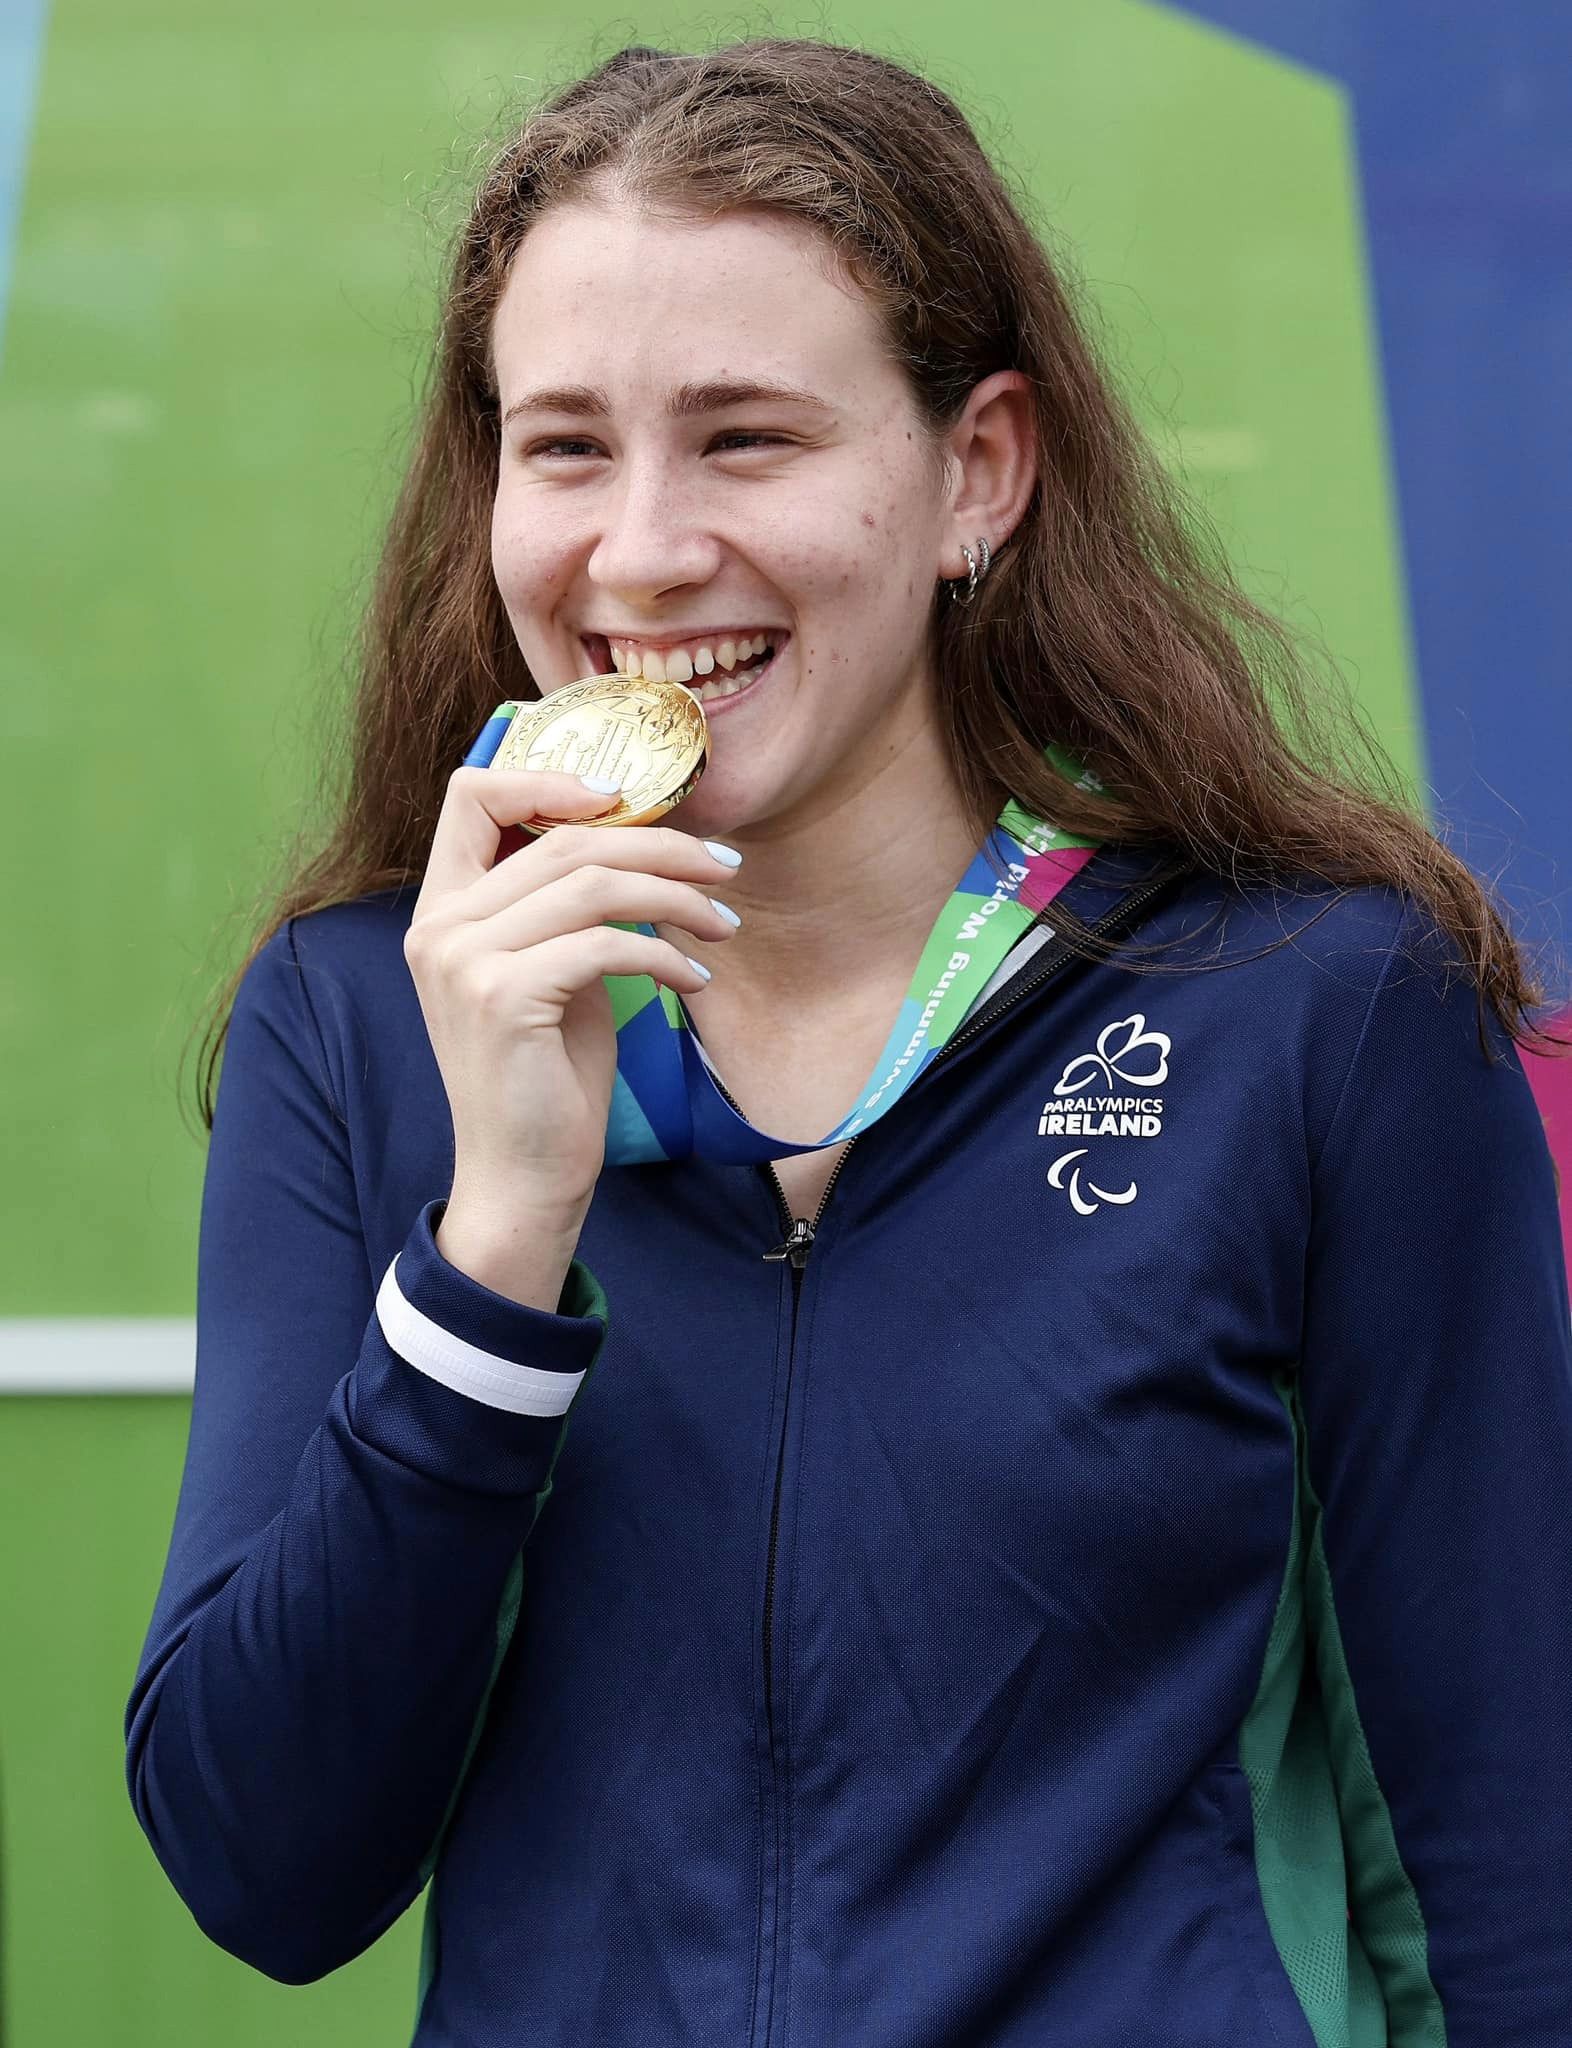 Roisin NI Riain bites into a gold medal while smiling at the camera